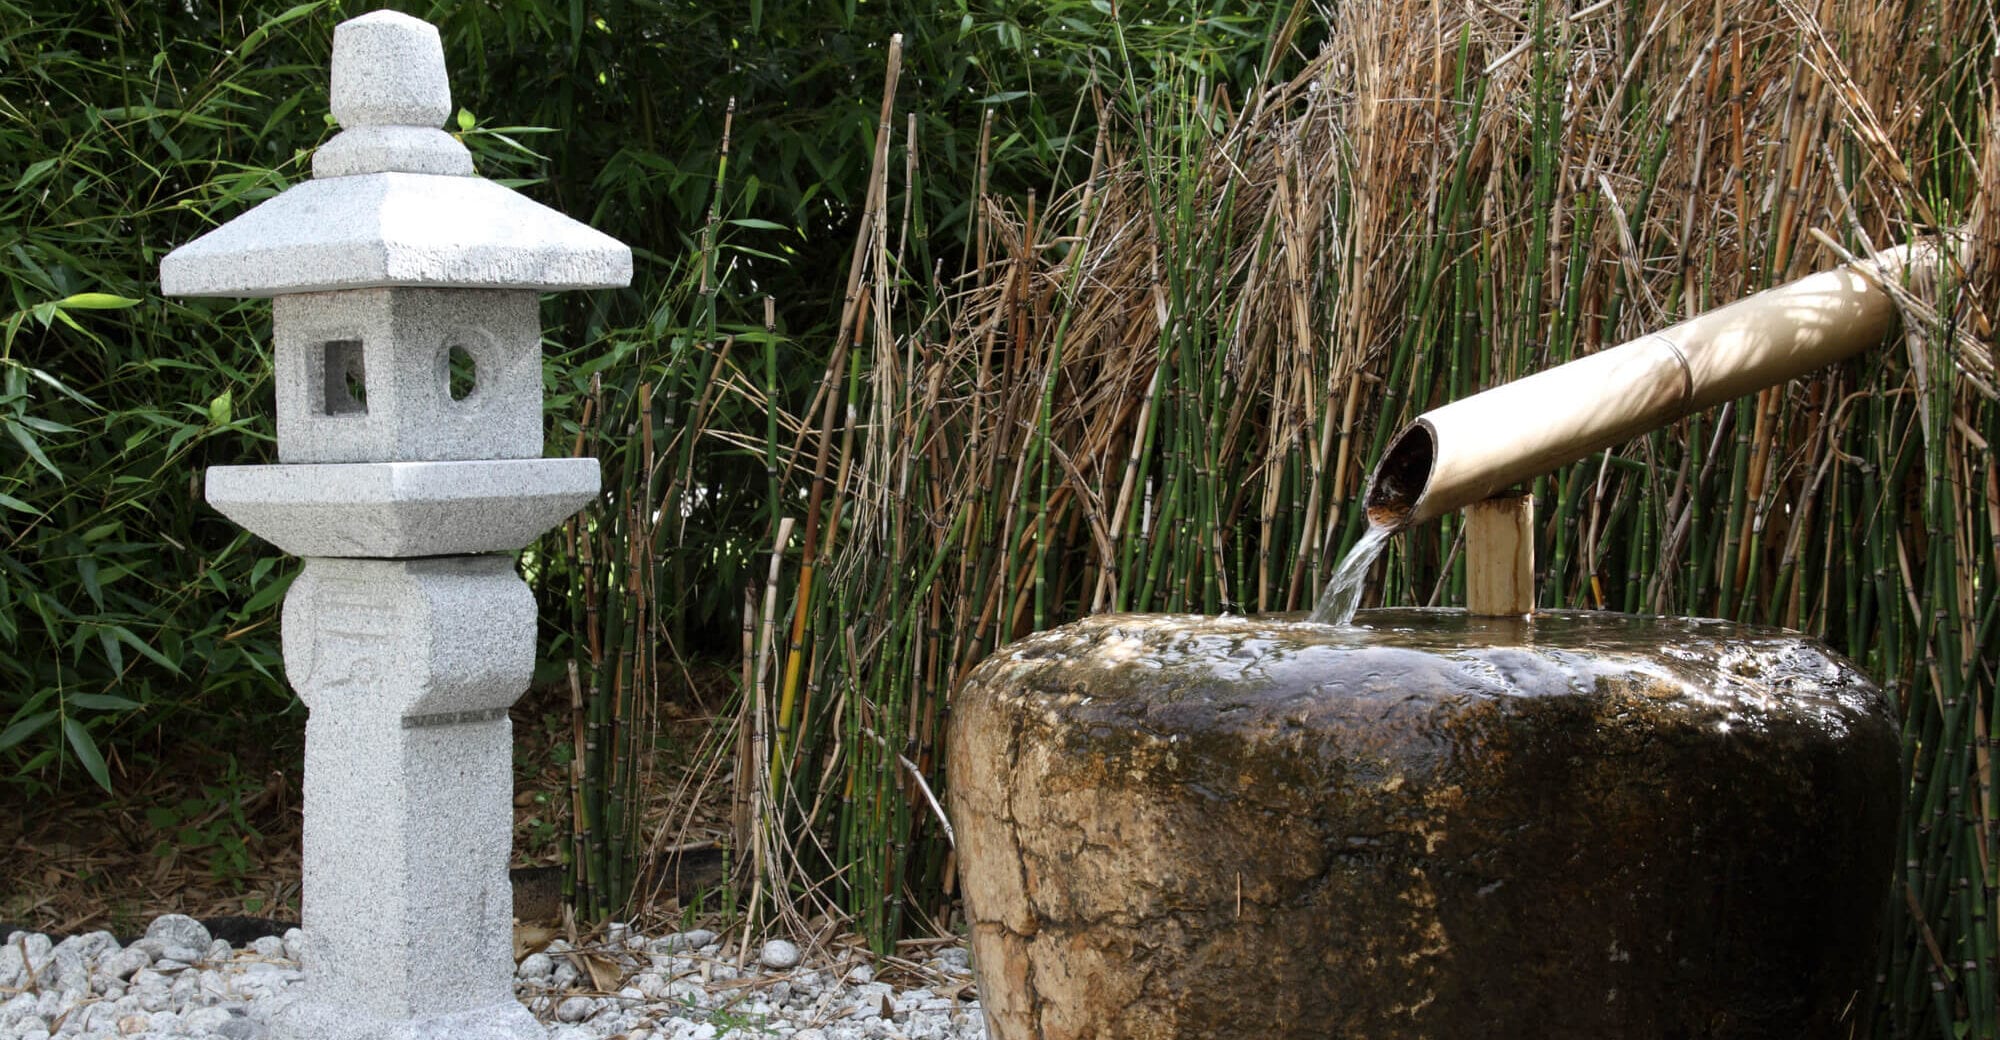 IV. Essential Elements of a Zen Garden